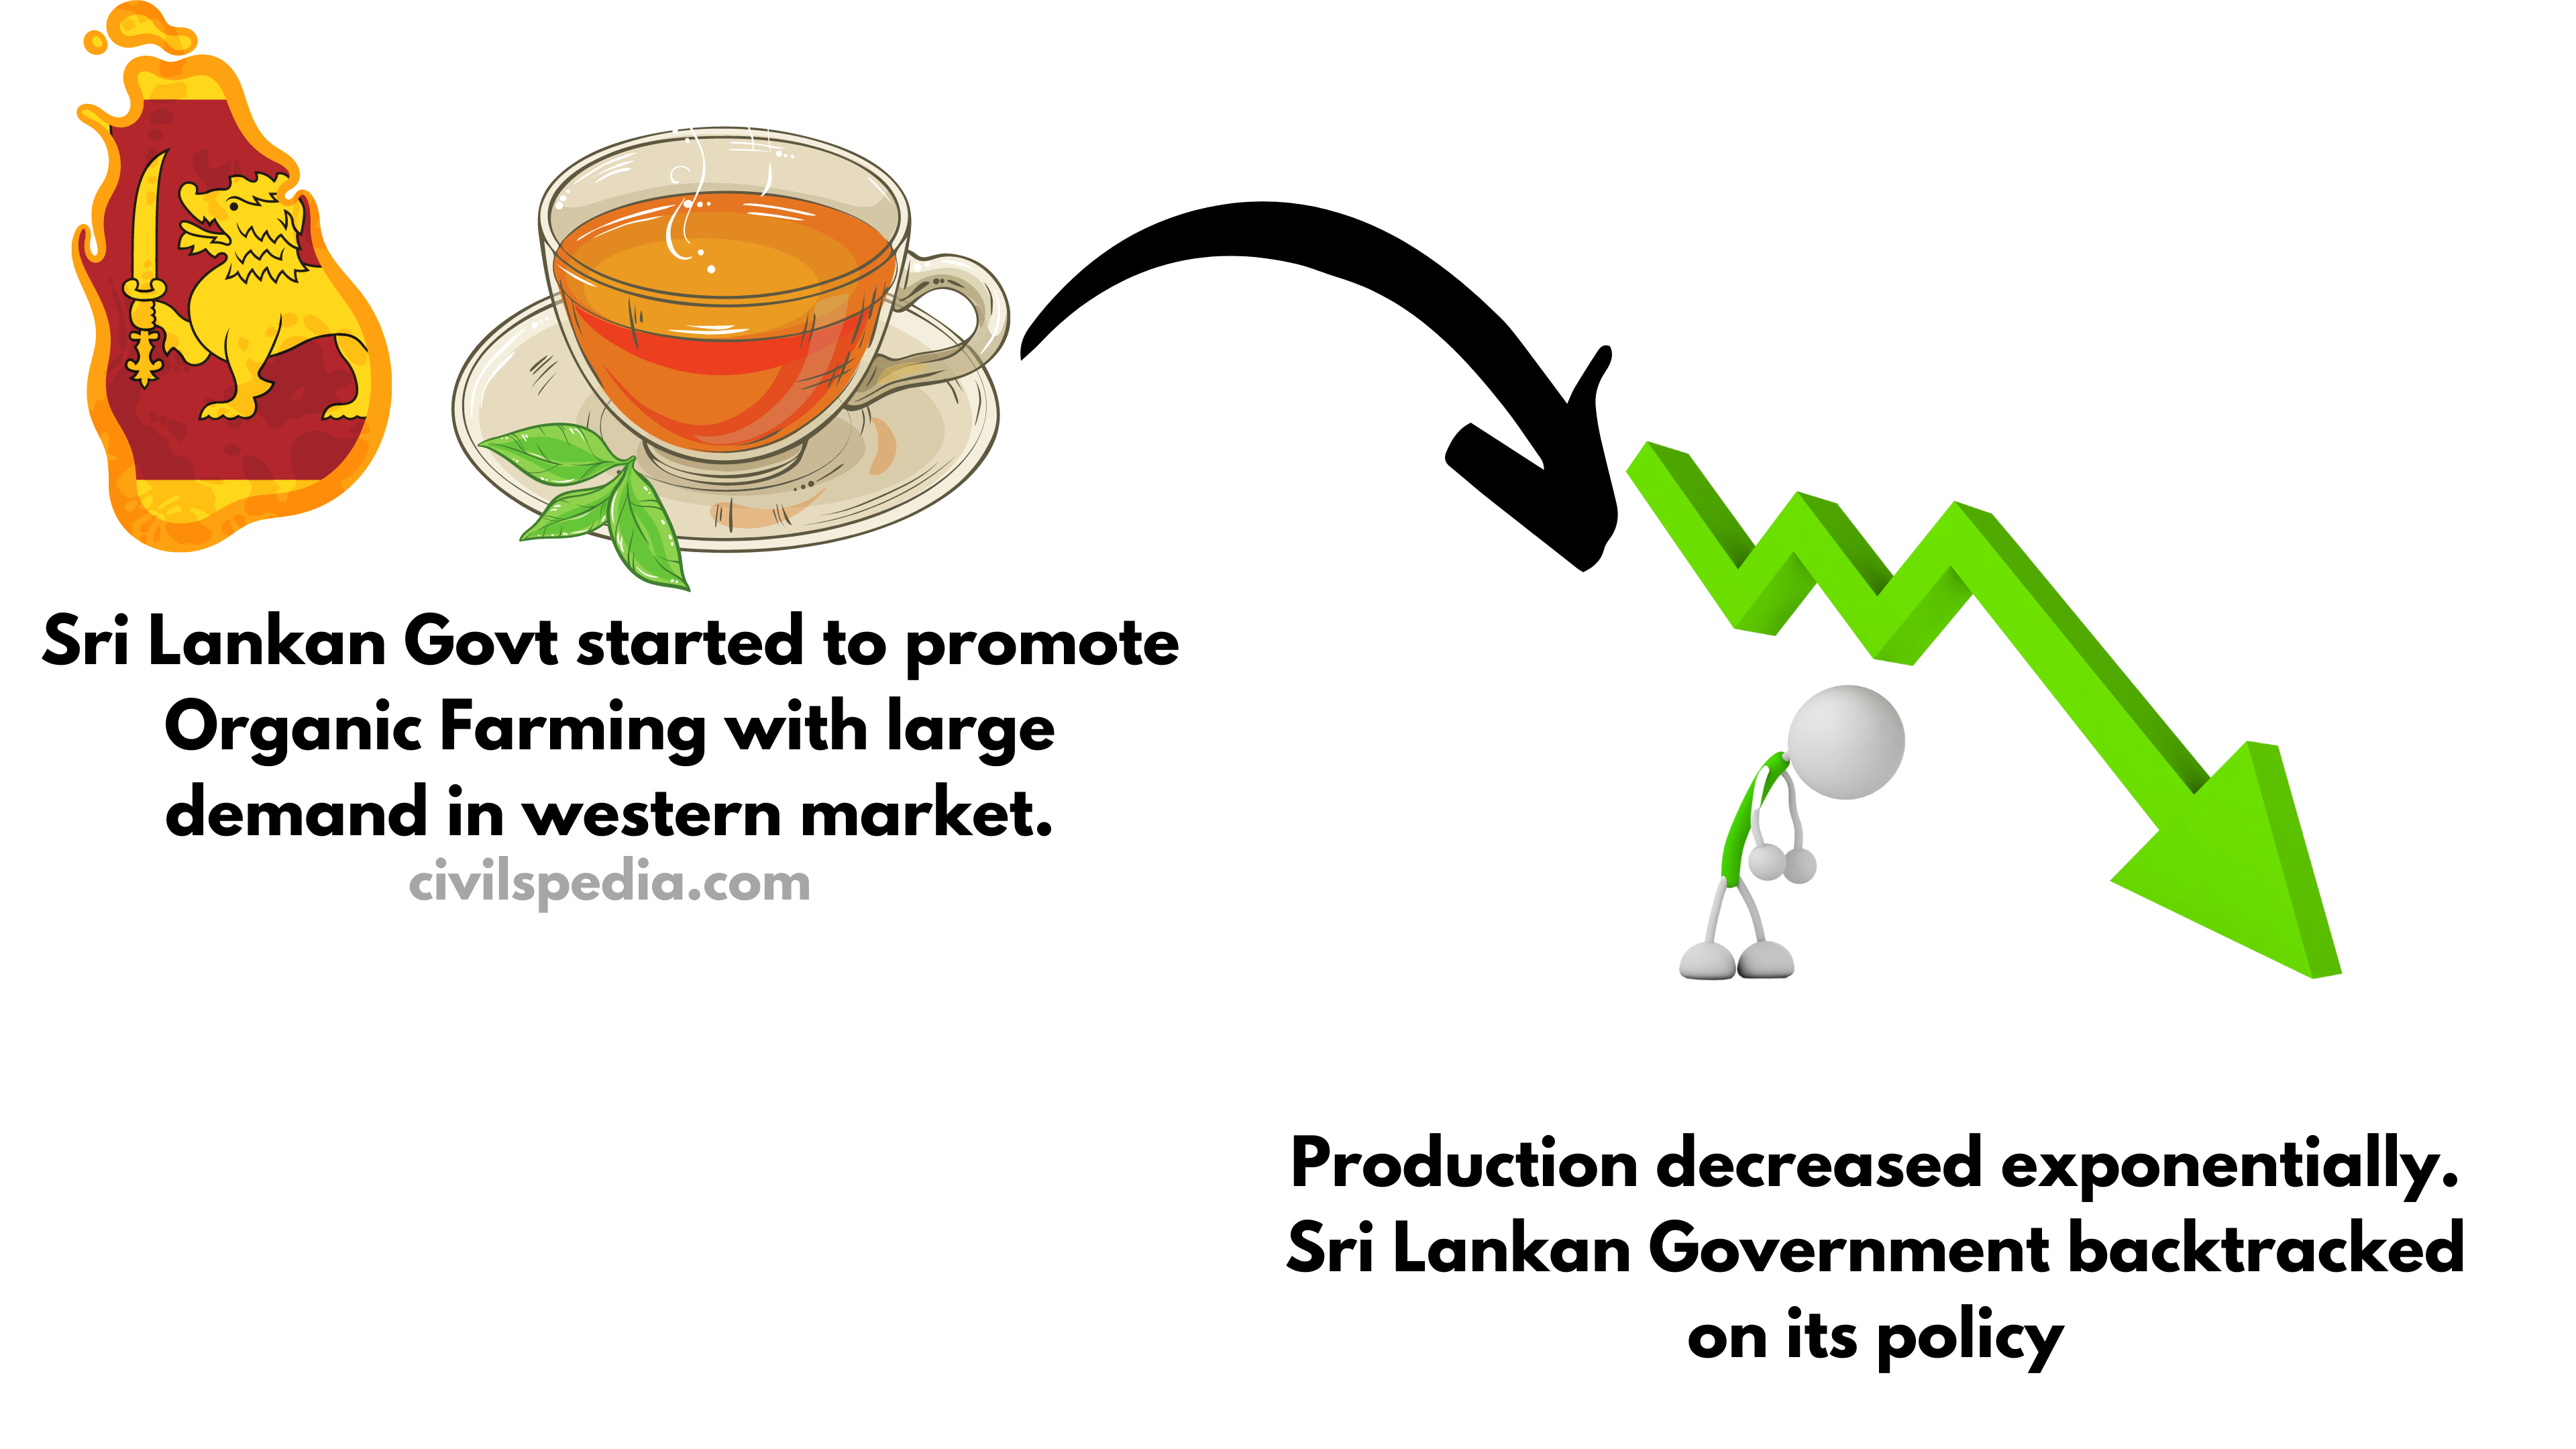 Case Study of Sri Lanka for Organic Farming